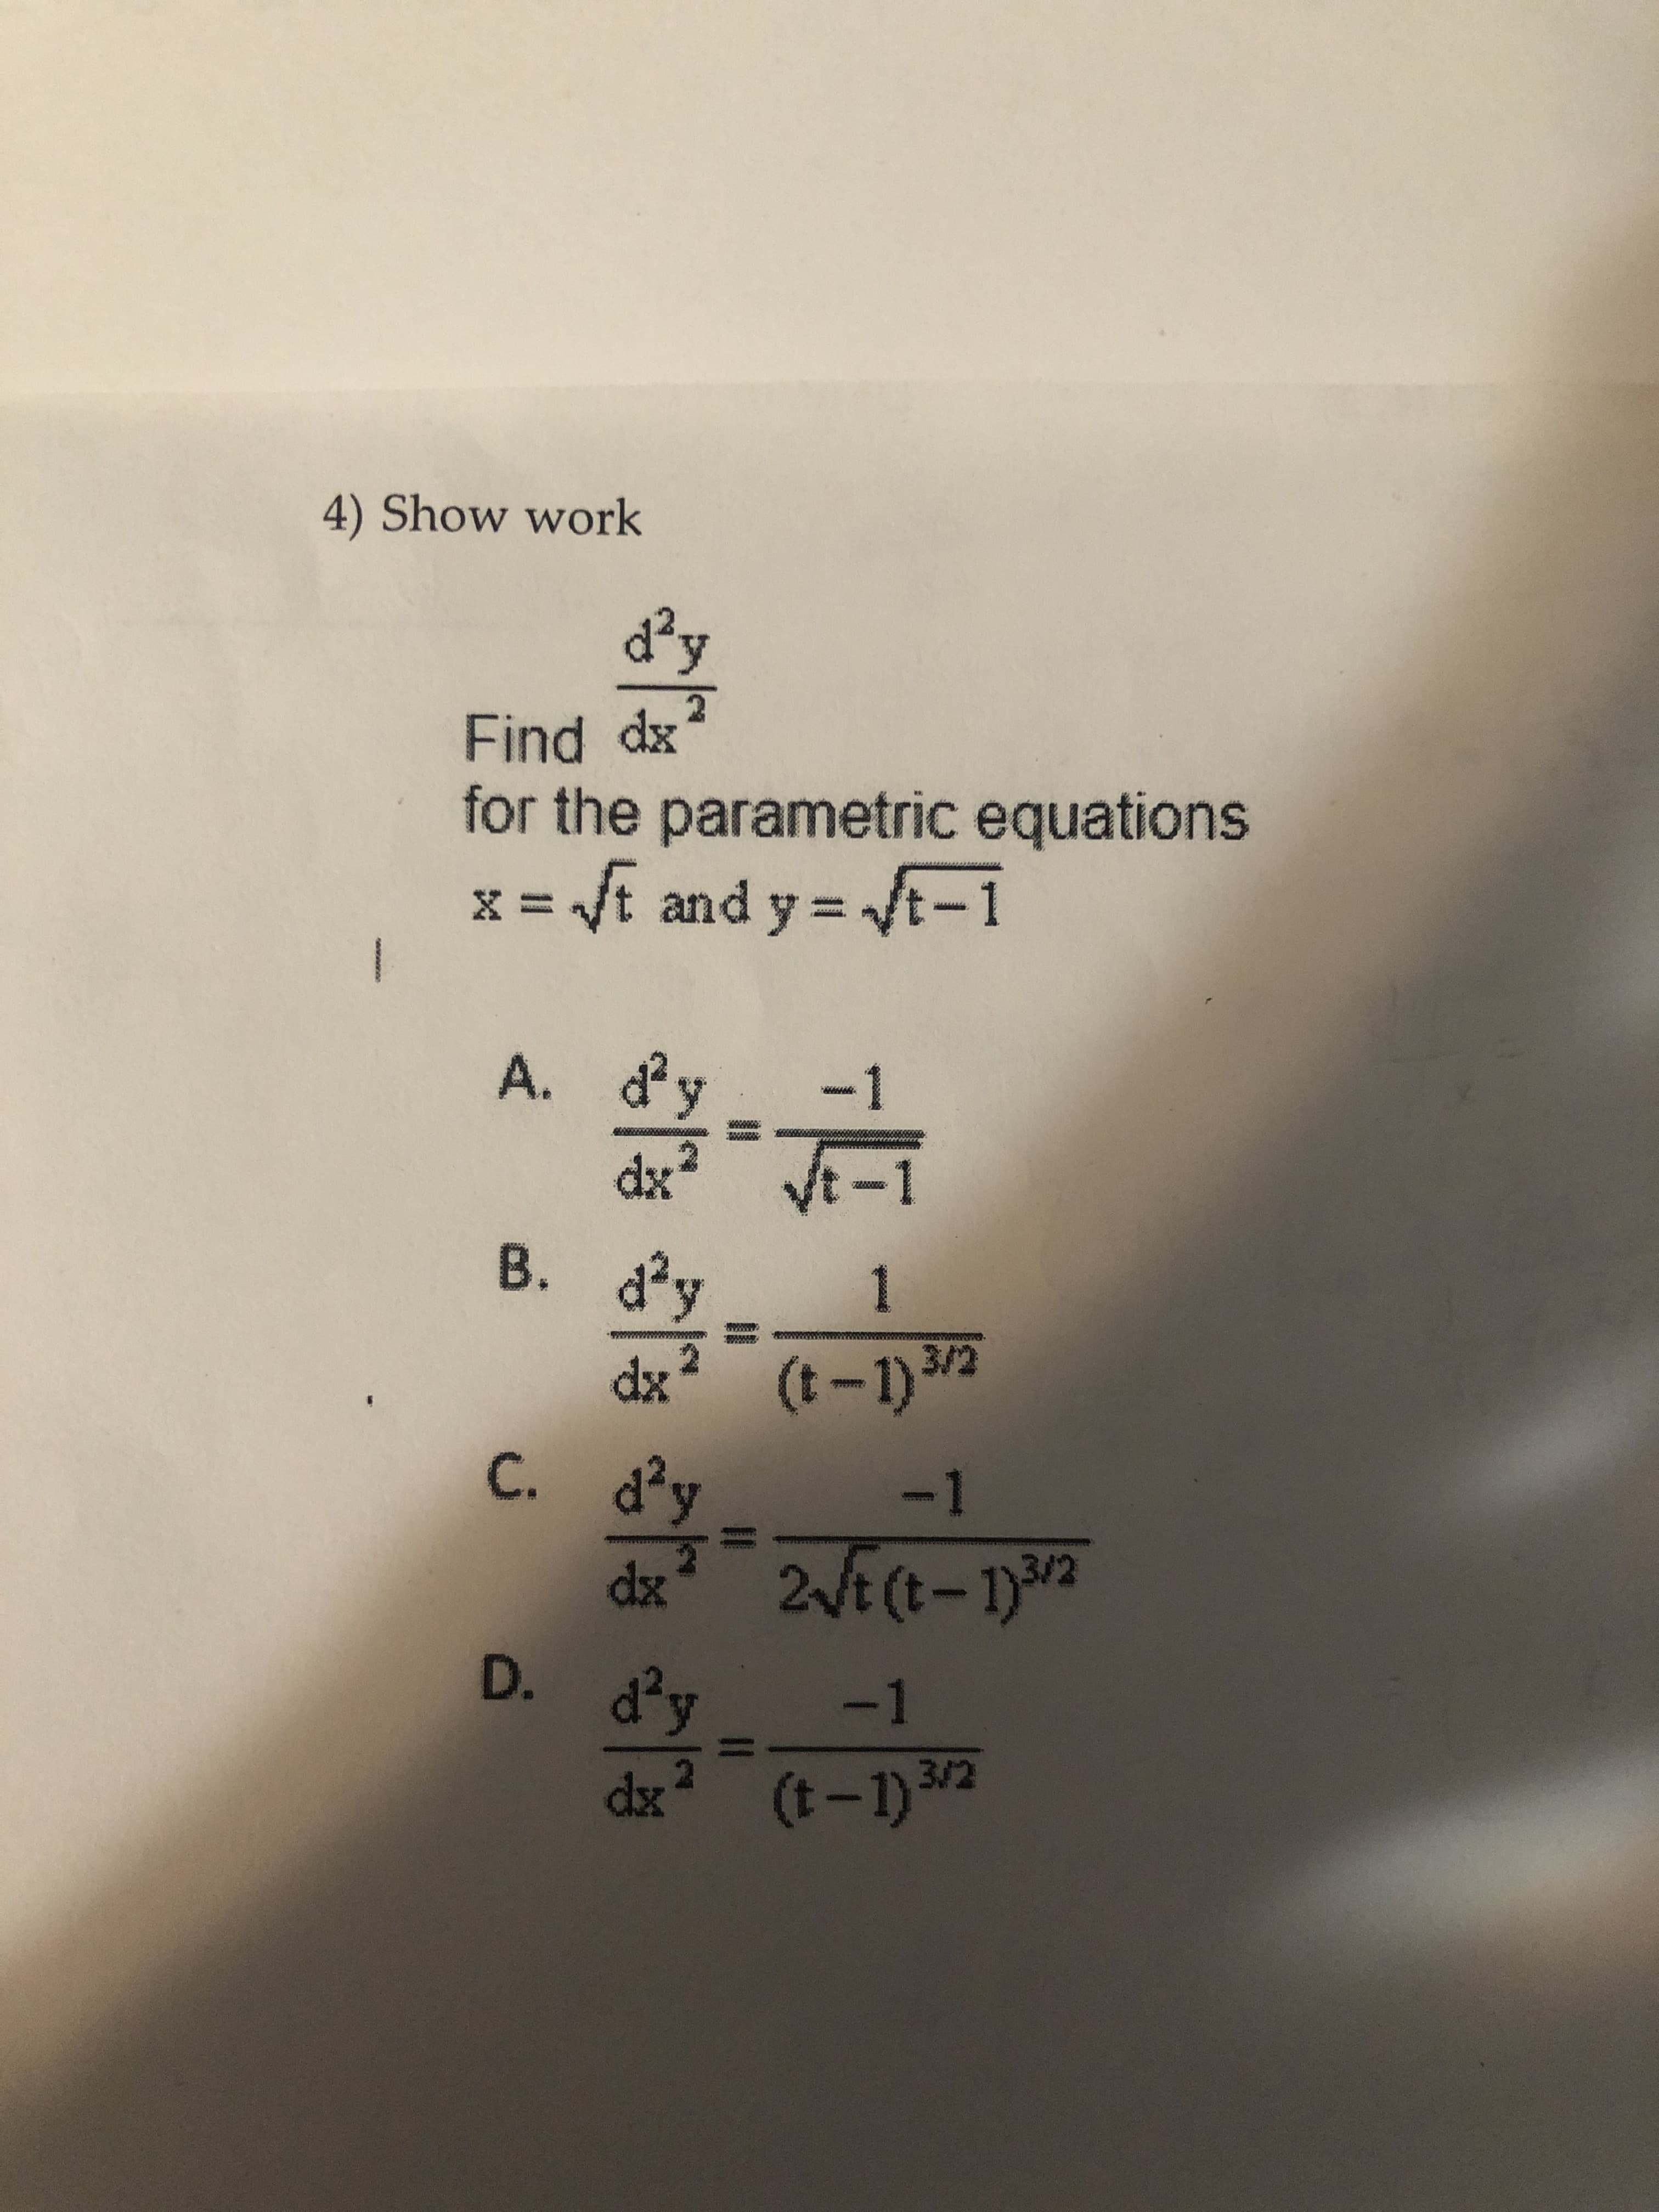 rametric equations
y= -1
